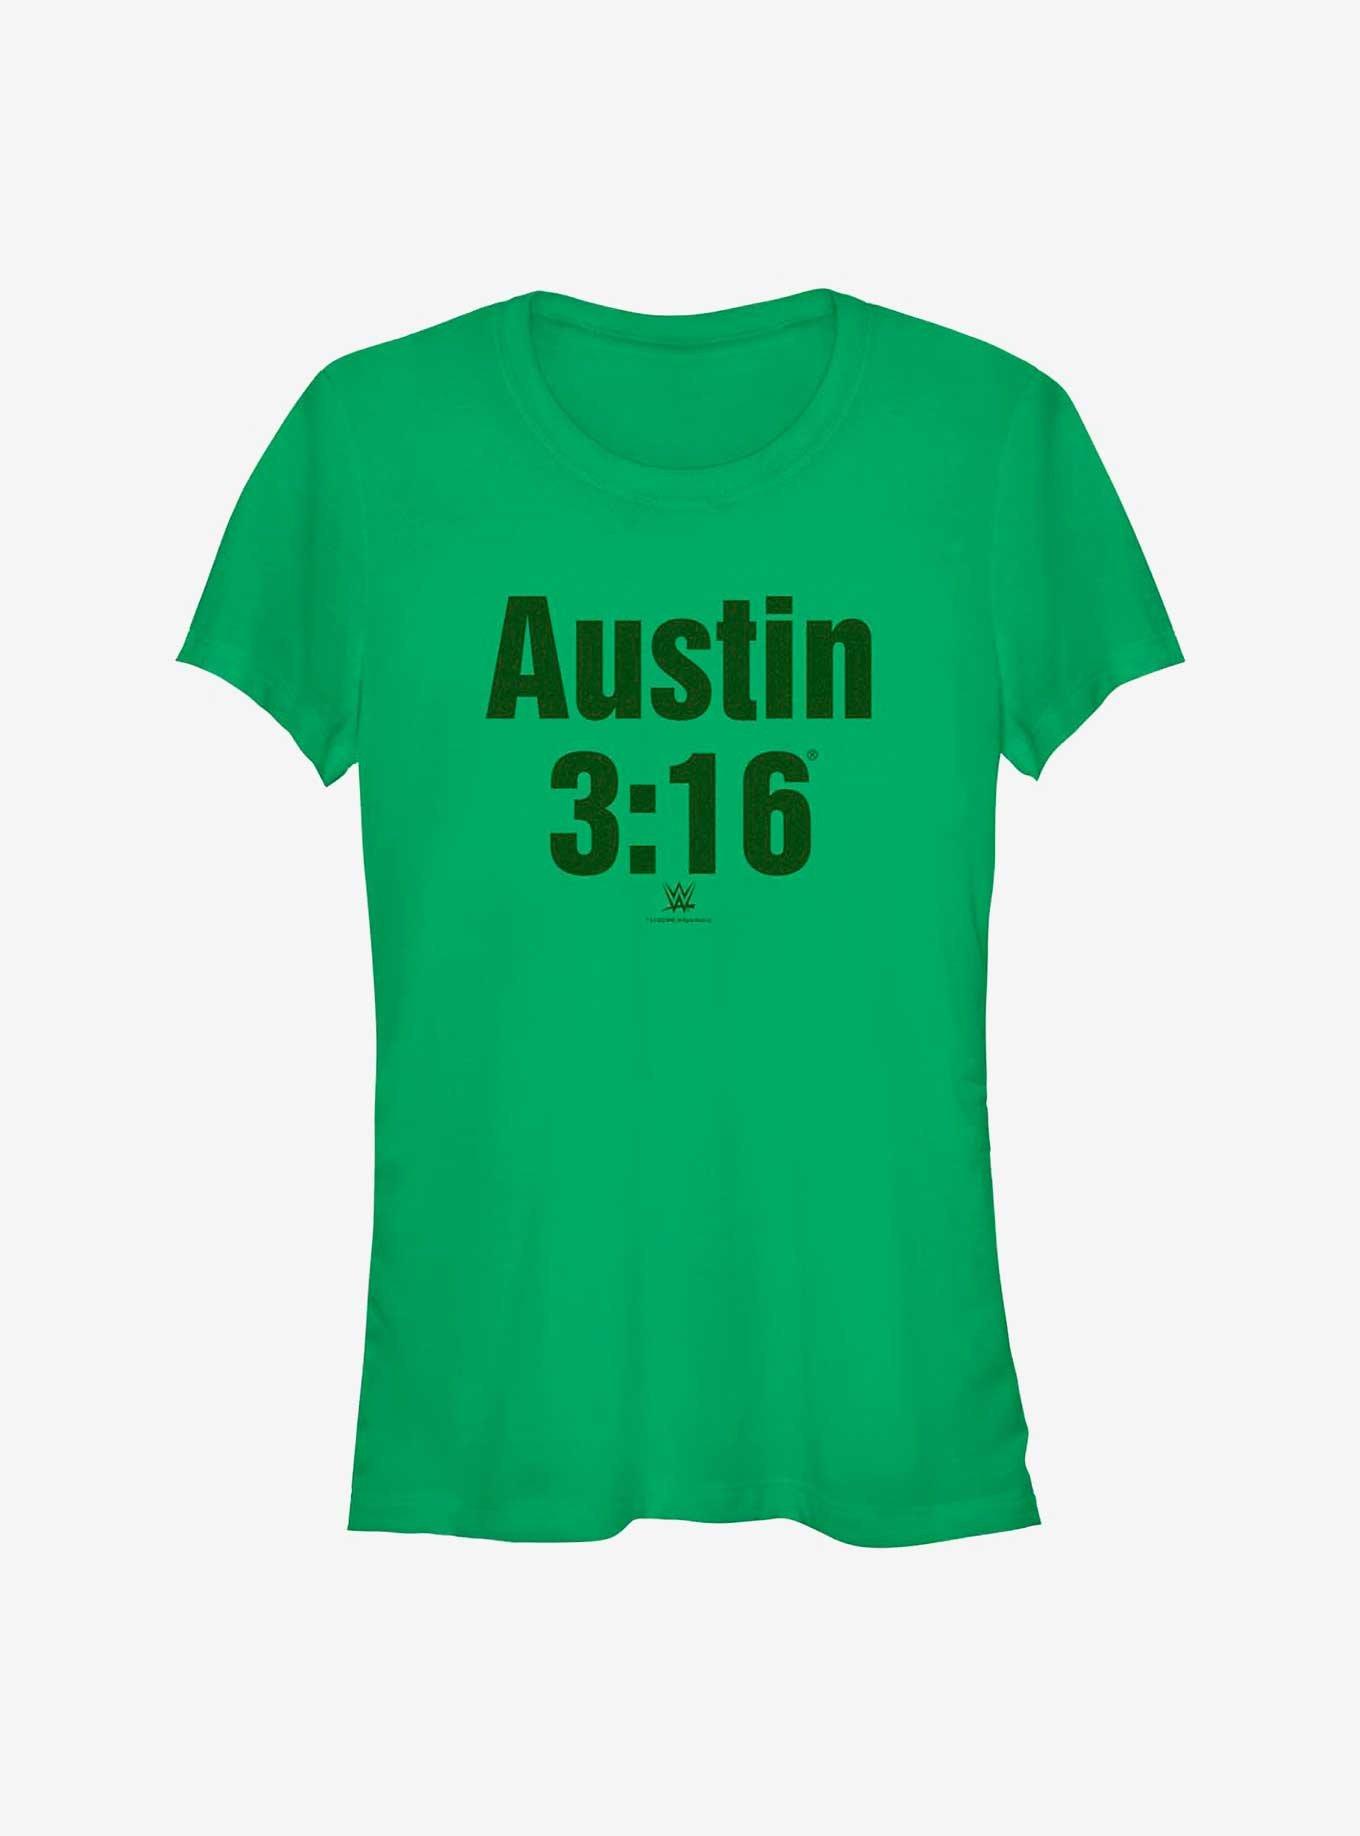 WWE Stone Cold Steve Austin 3:16 Green Era Girls T-Shirt